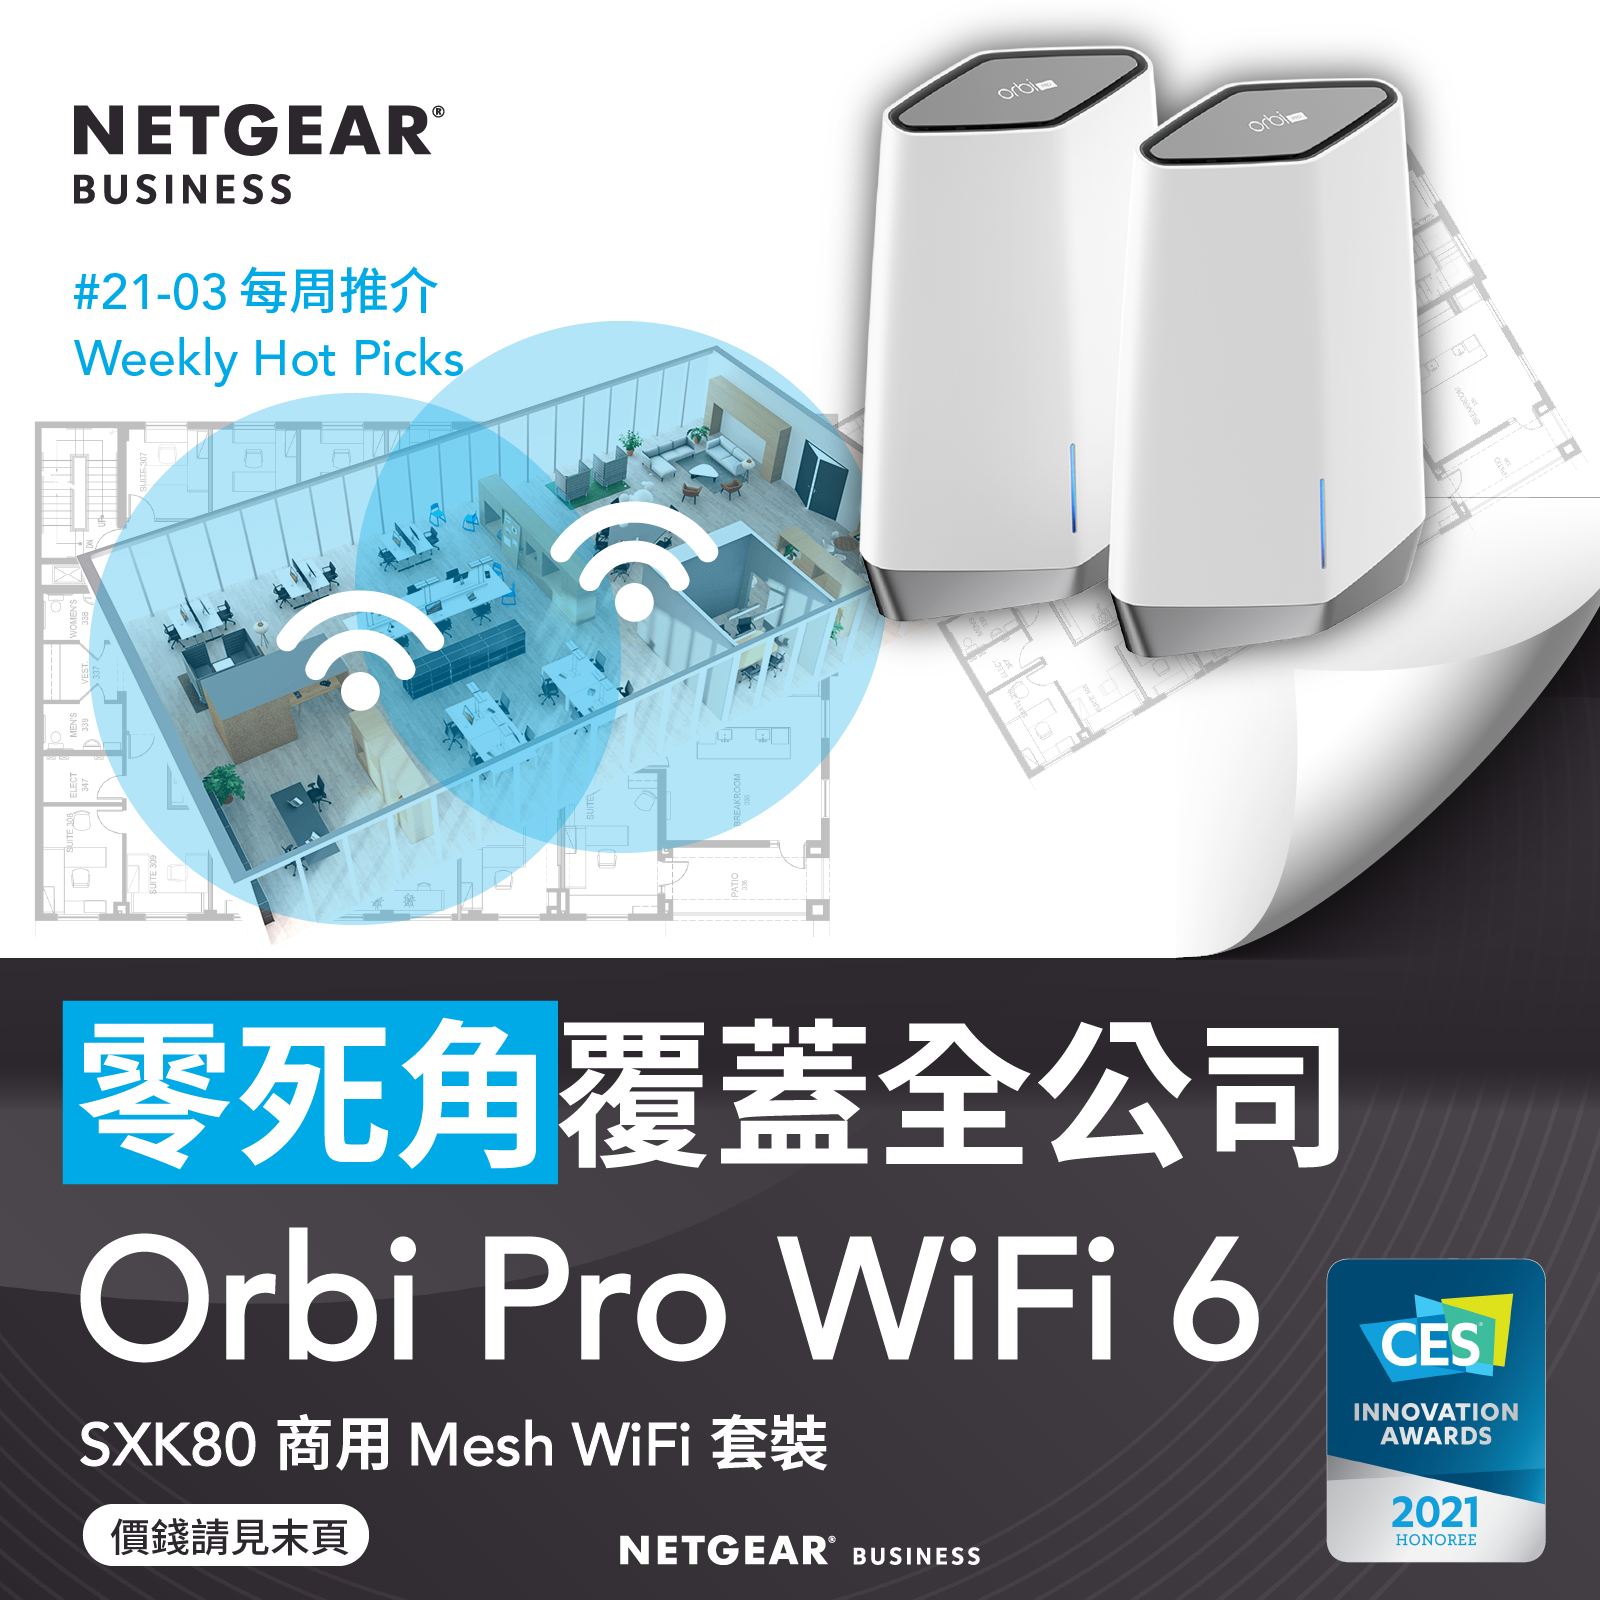 <b>Issue 21-03</b><br>零死角覆蓋全公司 - Orbi Pro WiFi 6 (SXK80) 商用 Mesh WiFi 套裝